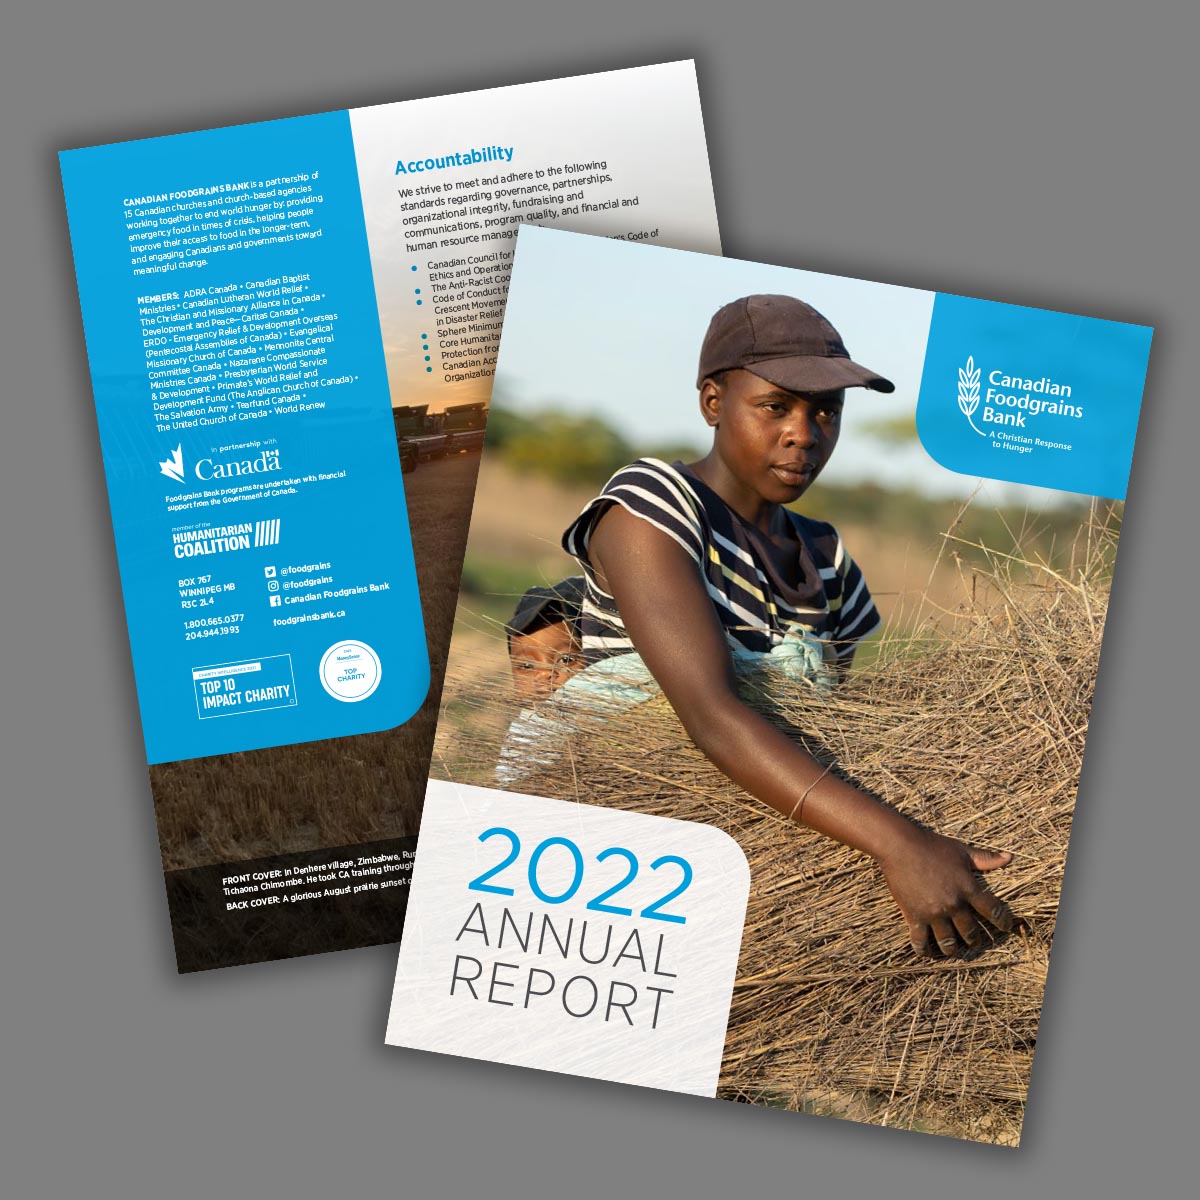 https://foodgrainsbank.ca/wp-content/uploads/2022/06/annual-report-2022.jpg